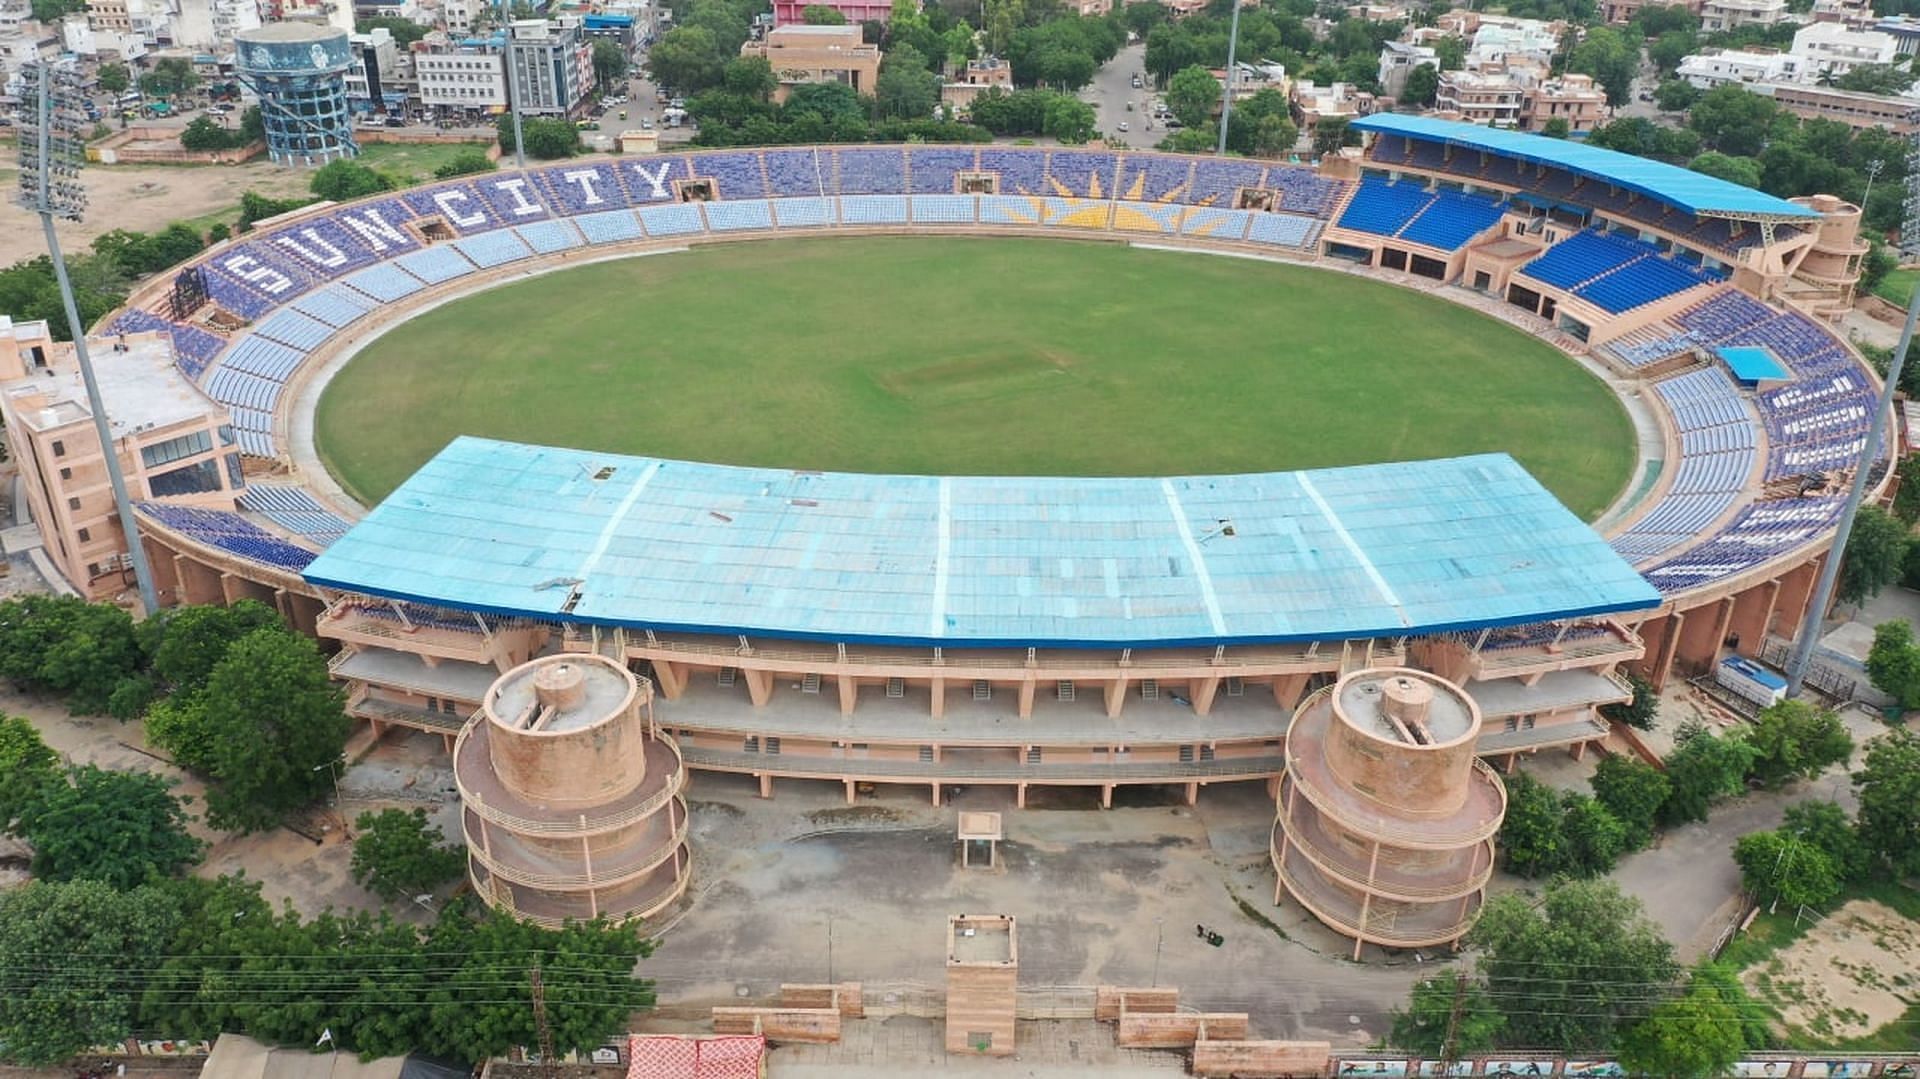 Legends League Cricket 2022 Table - Top, Best University in Jaipur, Rajasthan